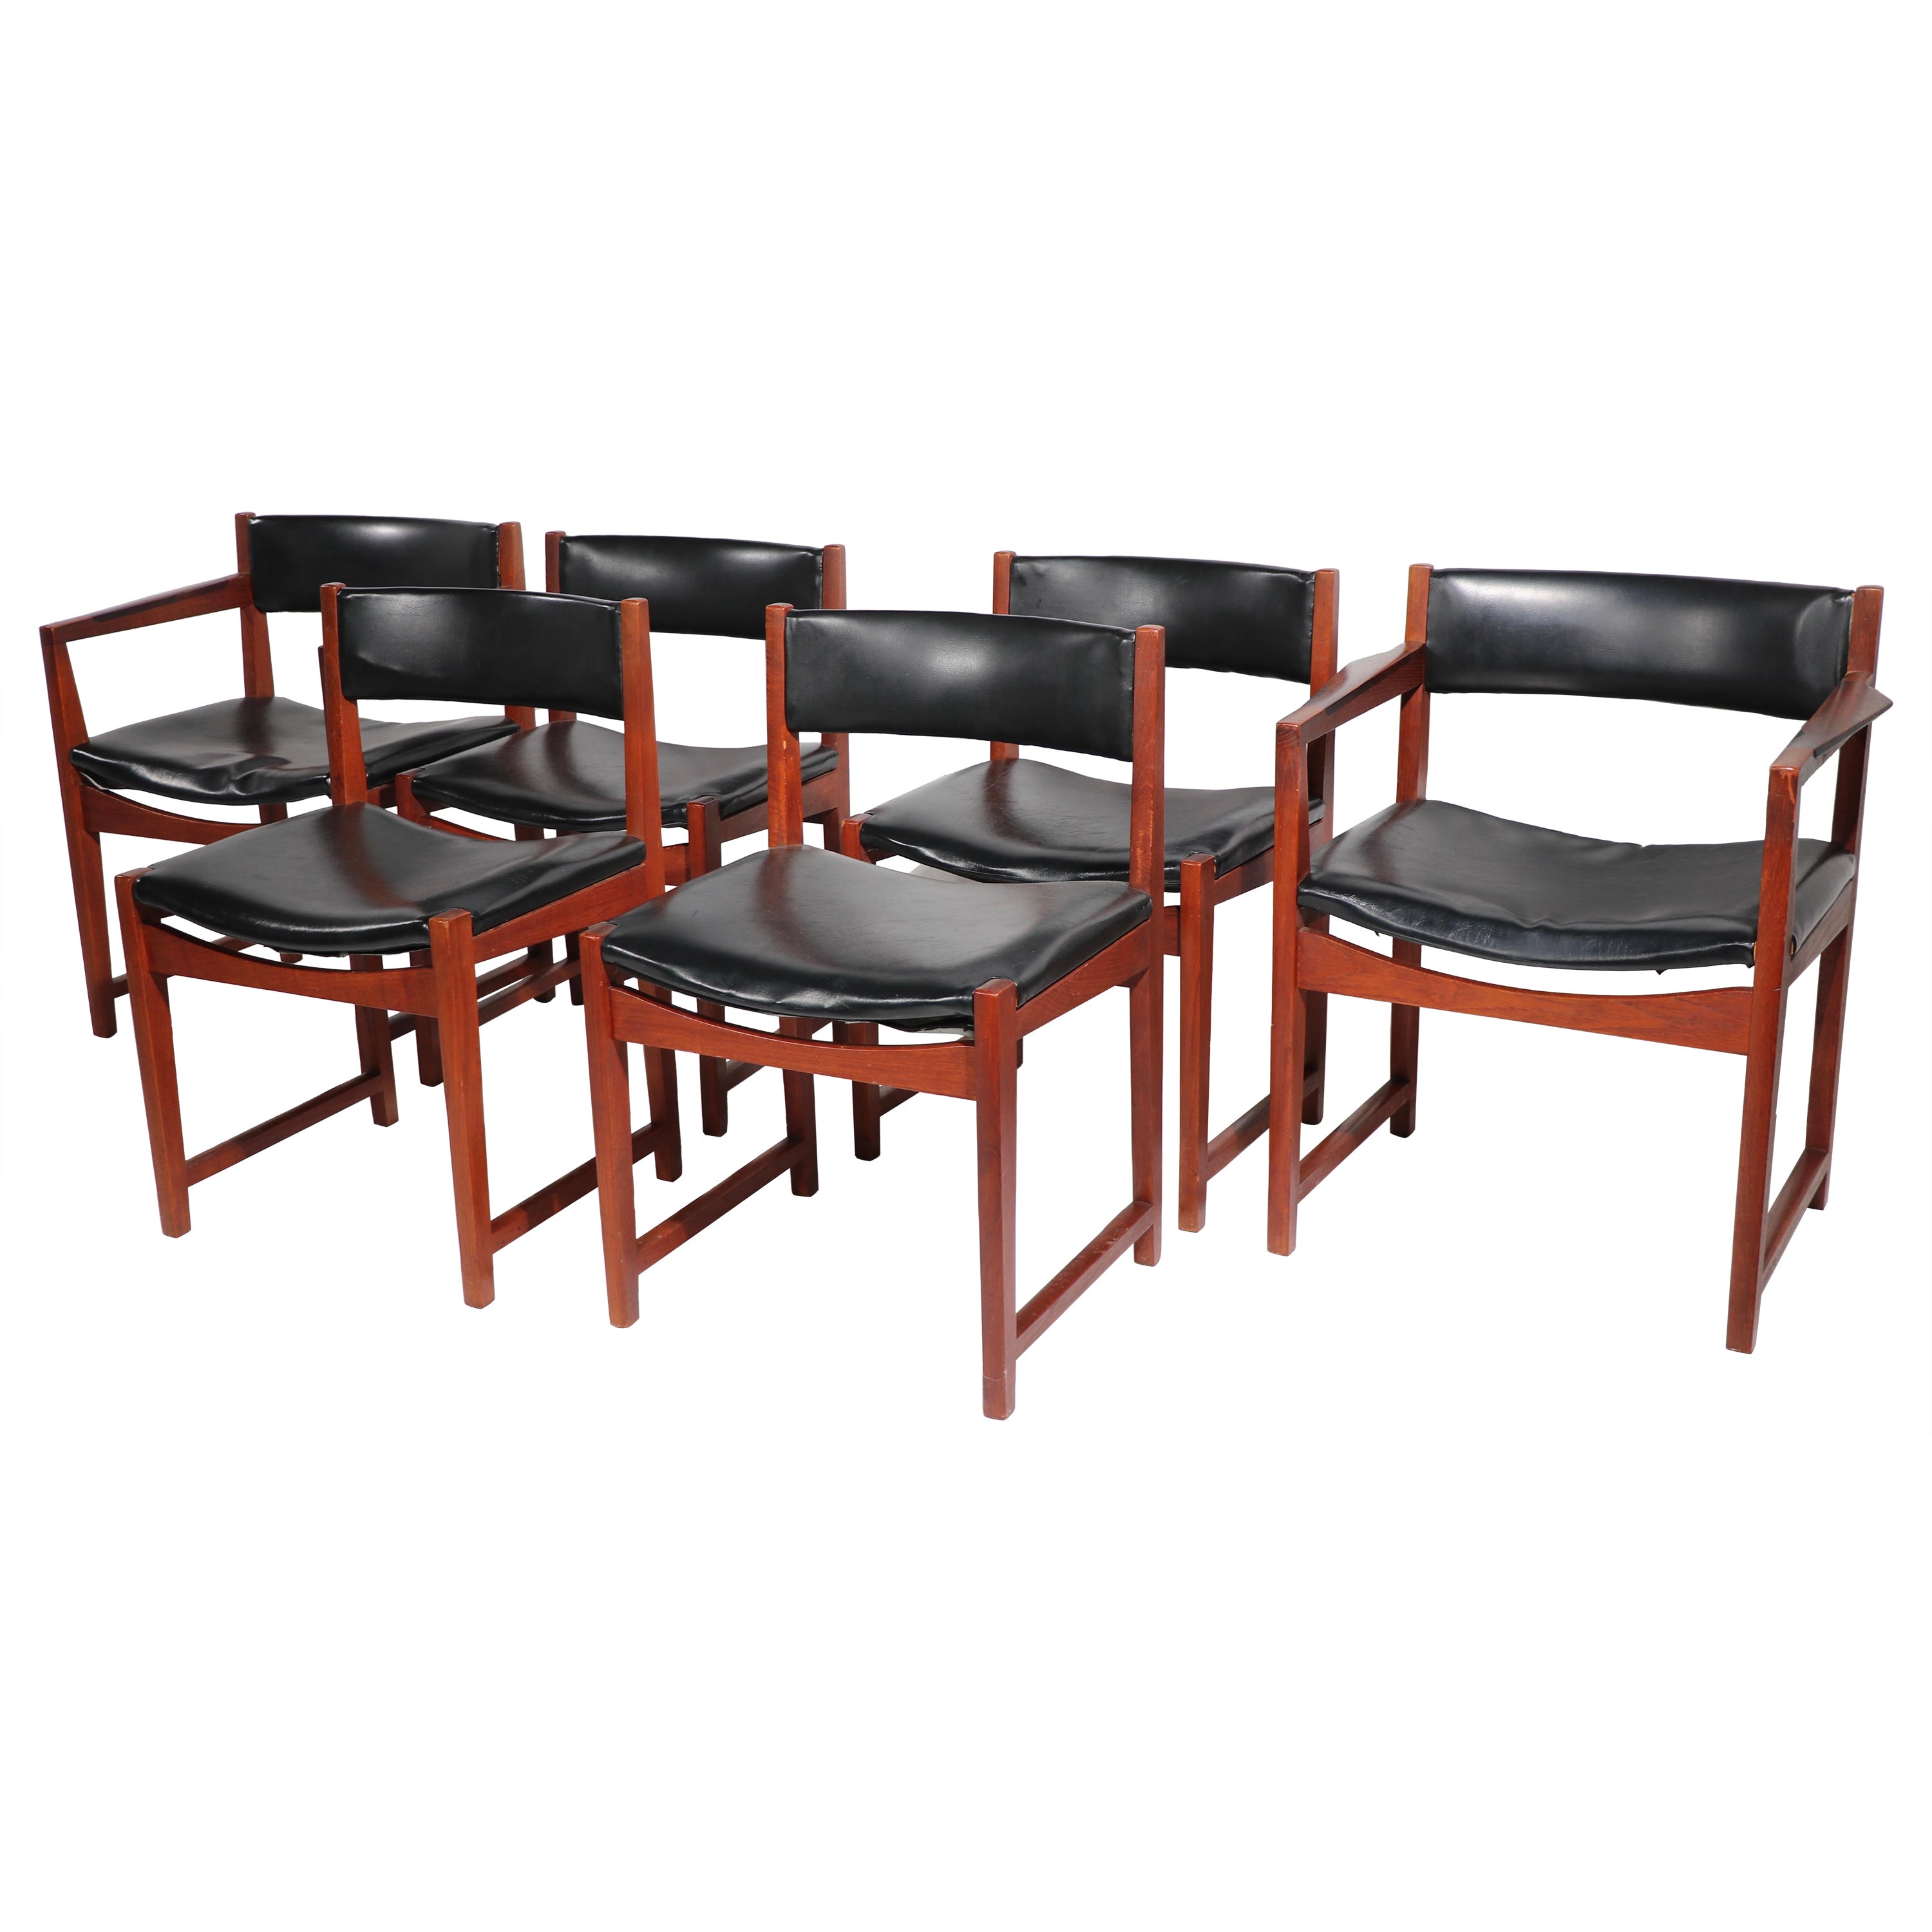 Set 6 Danish Dining Chairs by Peter Hvidt & Orla Molgaard for Soborg Mobelfabrik